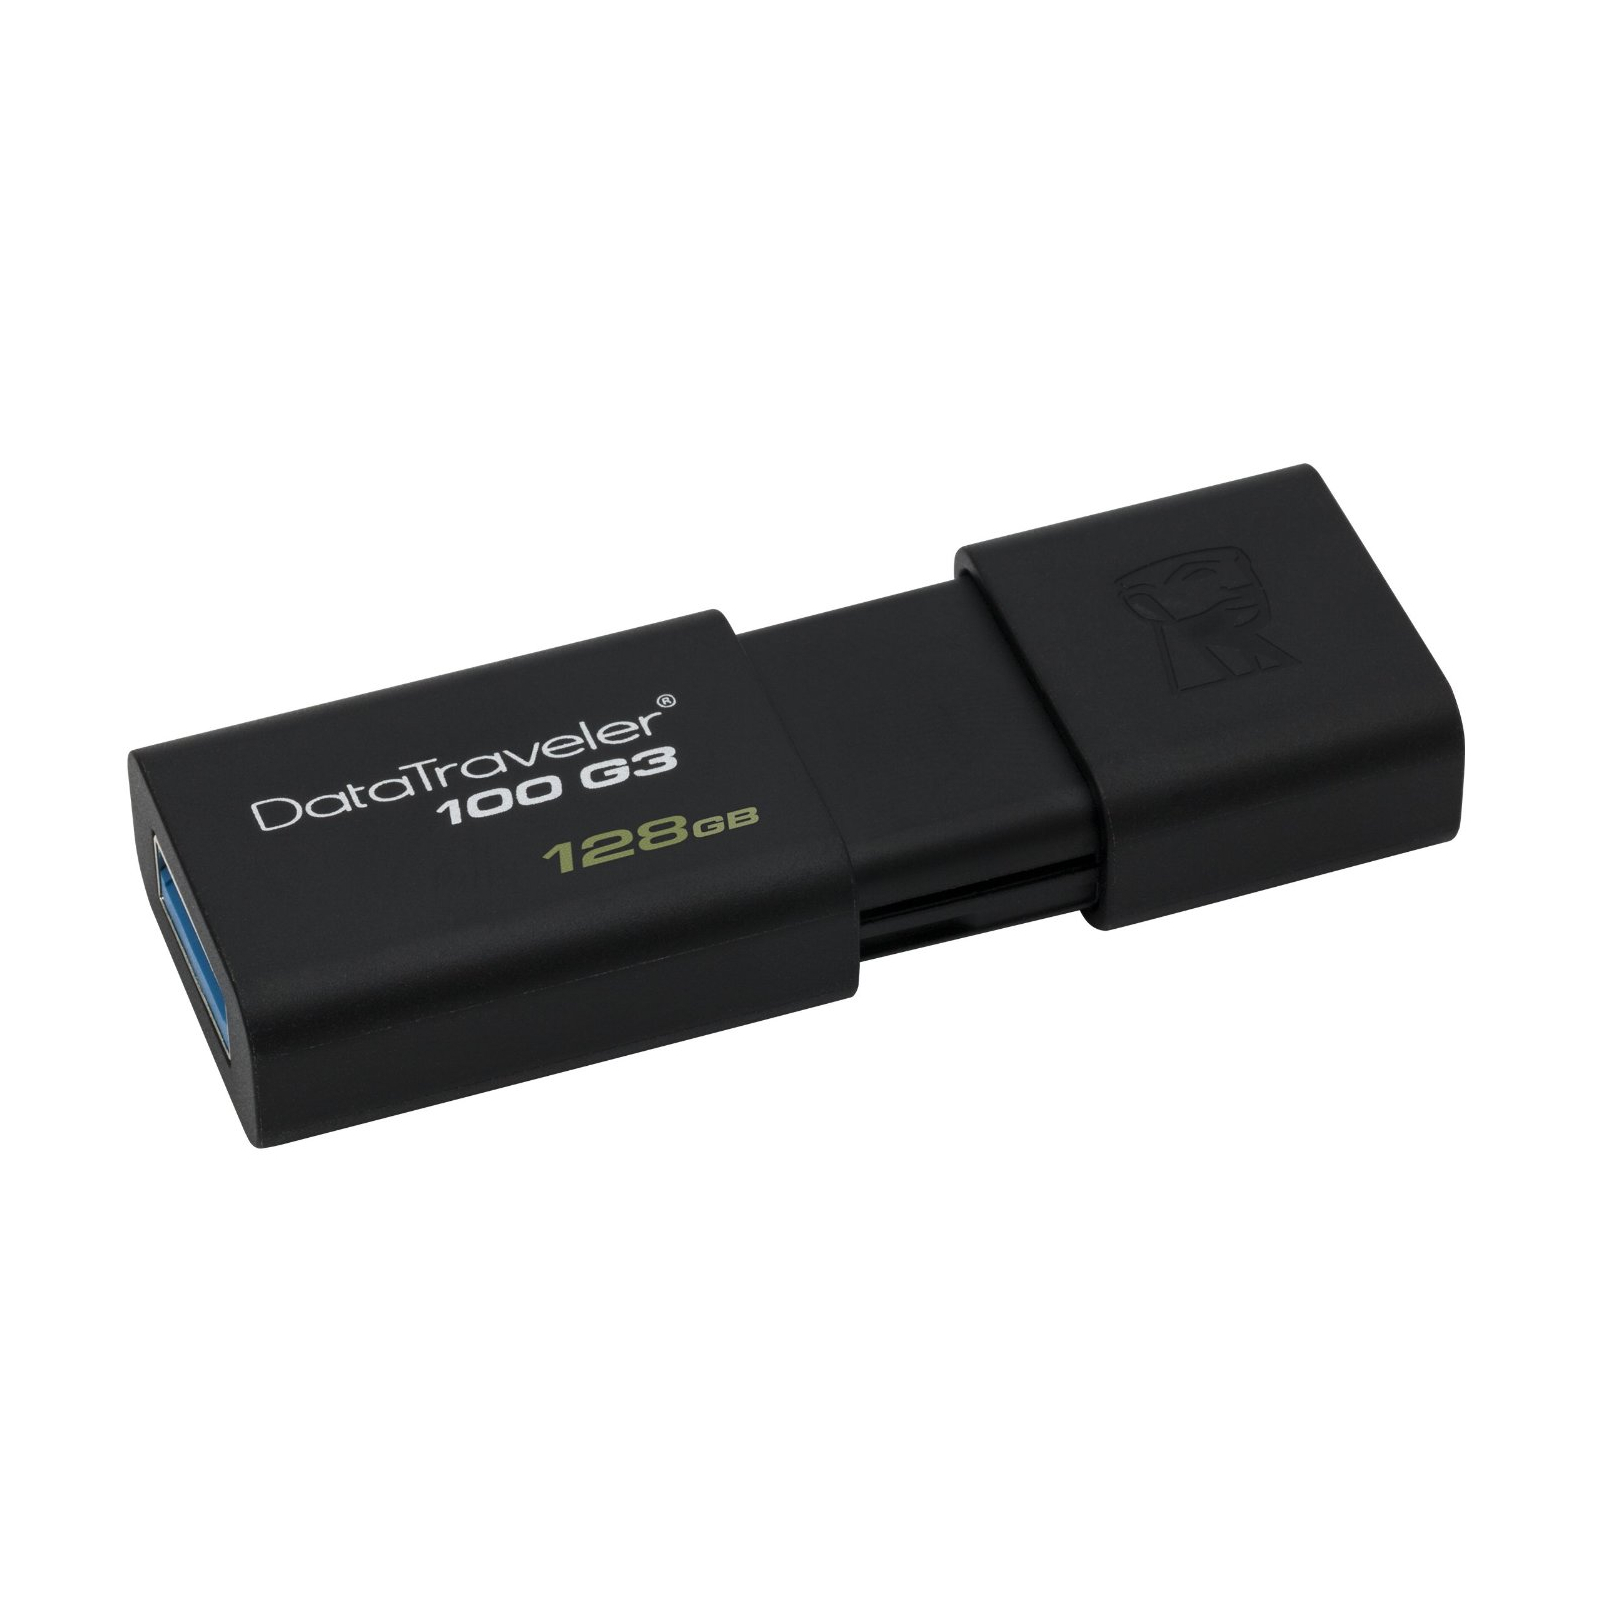 USB флеш накопитель Kingston 128GB DT100 G3 Black USB 3.0 (DT100G3/128GB) изображение 3